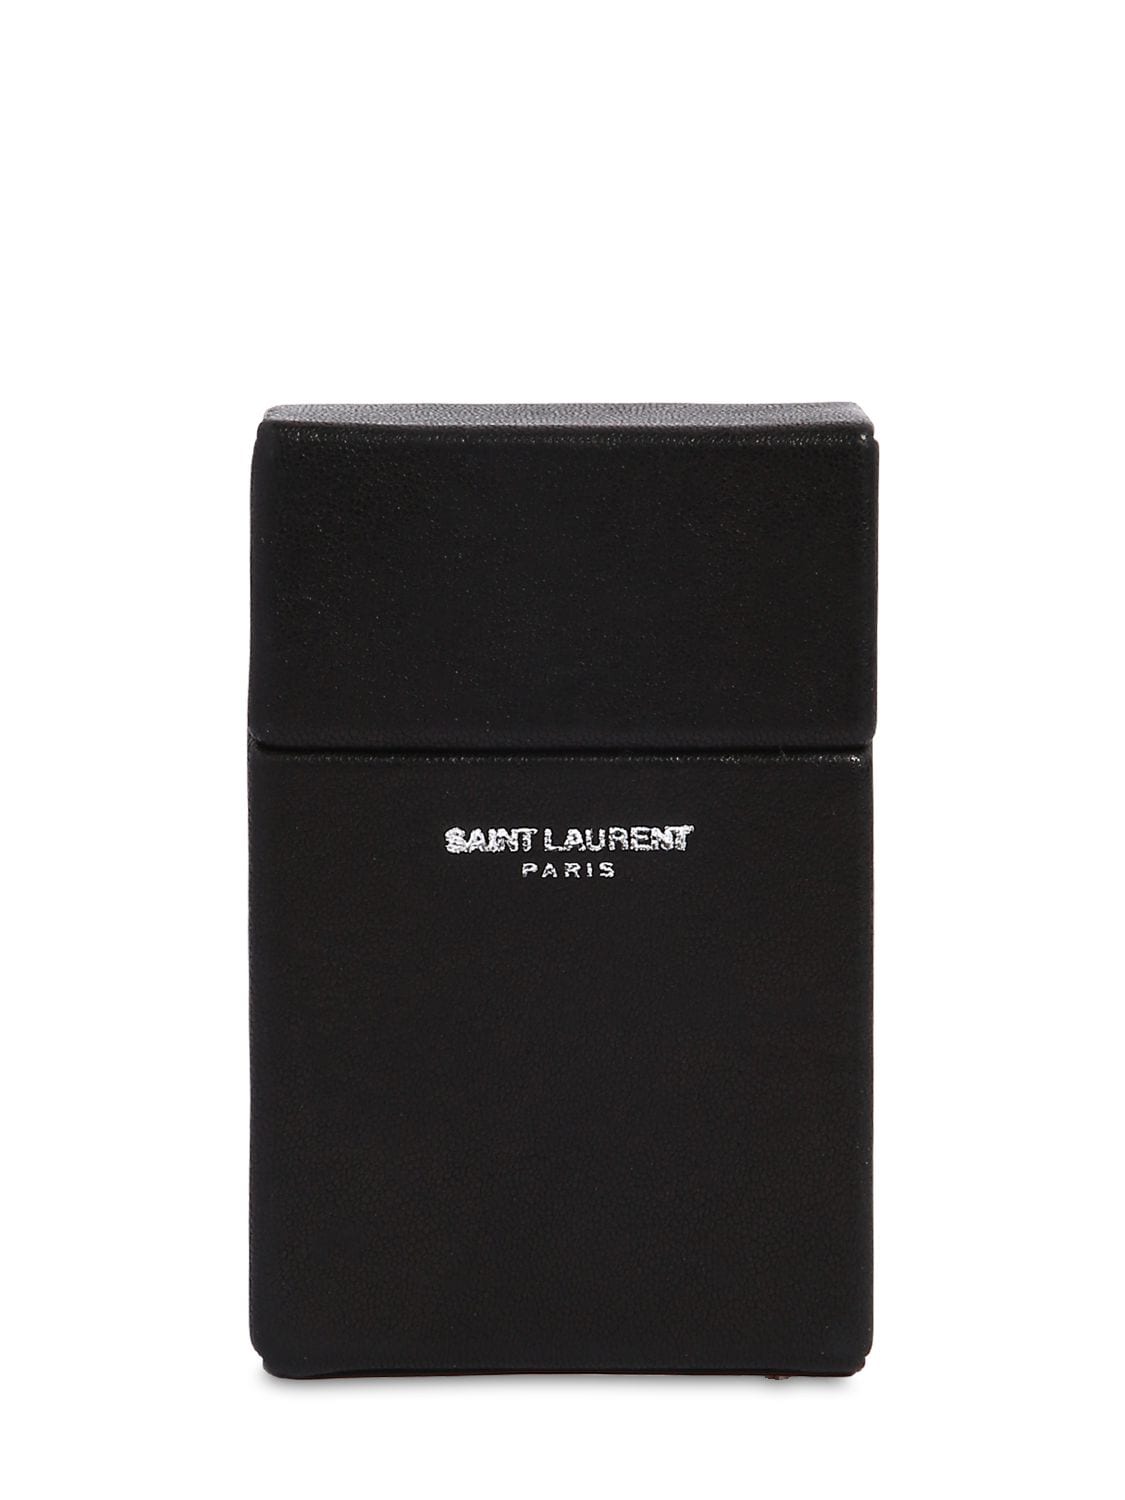 Saint Laurent Leather Cigarette Box In Black